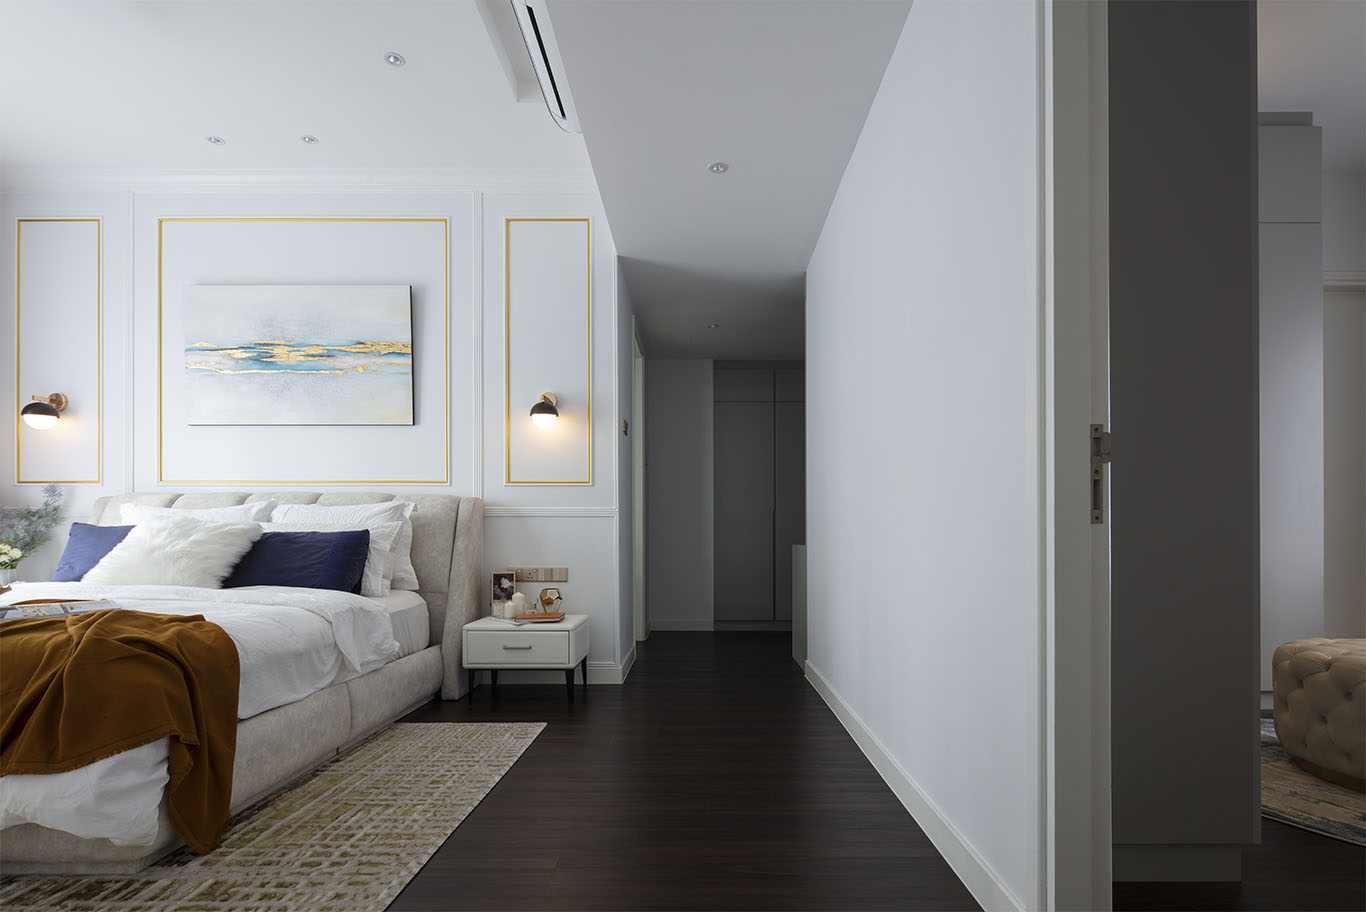 Modern bedroom interior design with wooden floor, minimalist carpet, and white nightstand